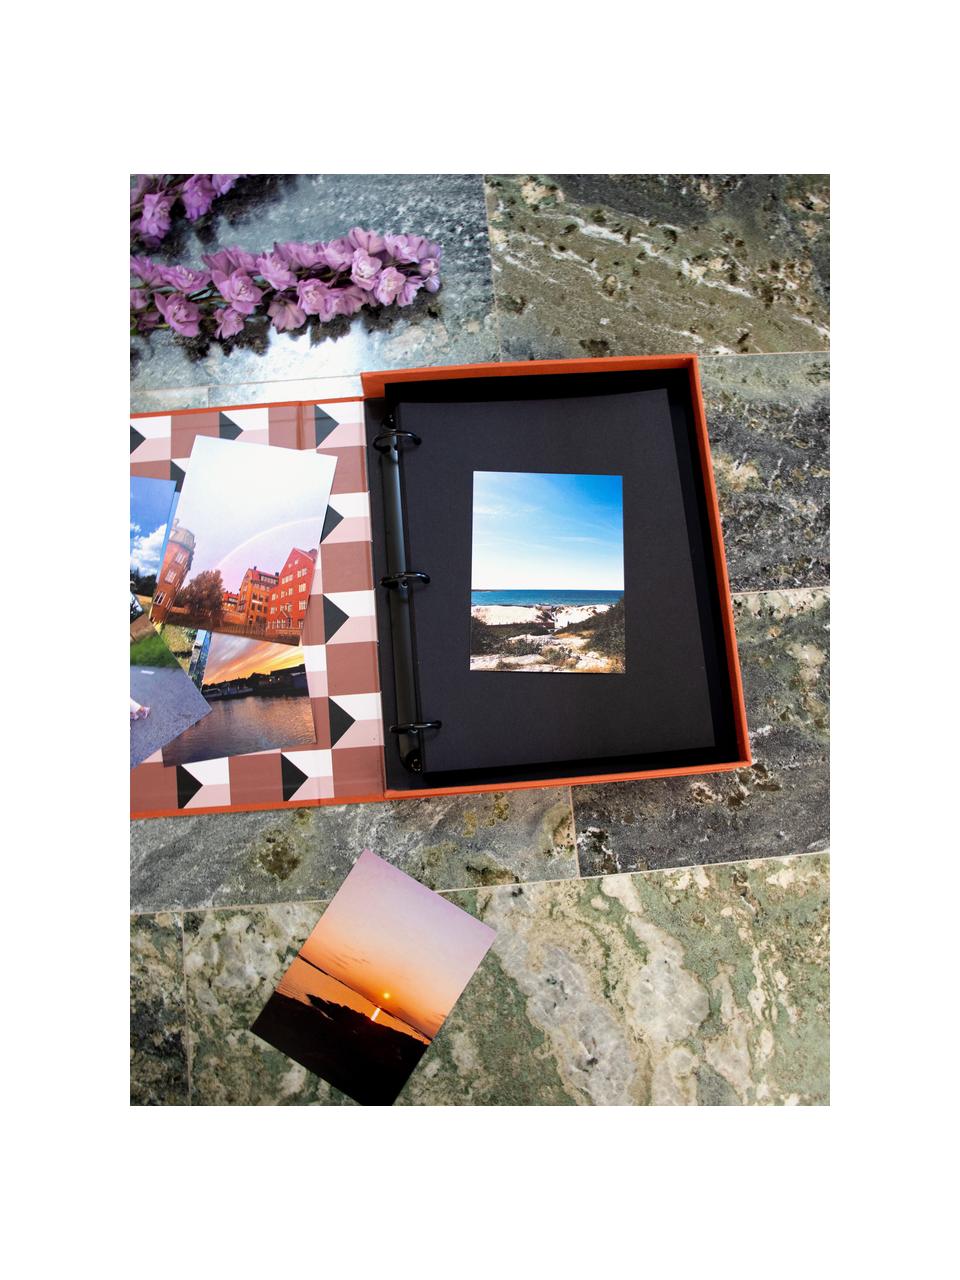 Fotoalbum Life in Pictures, Roestoranje, zwart, L 34 x B 29 cm